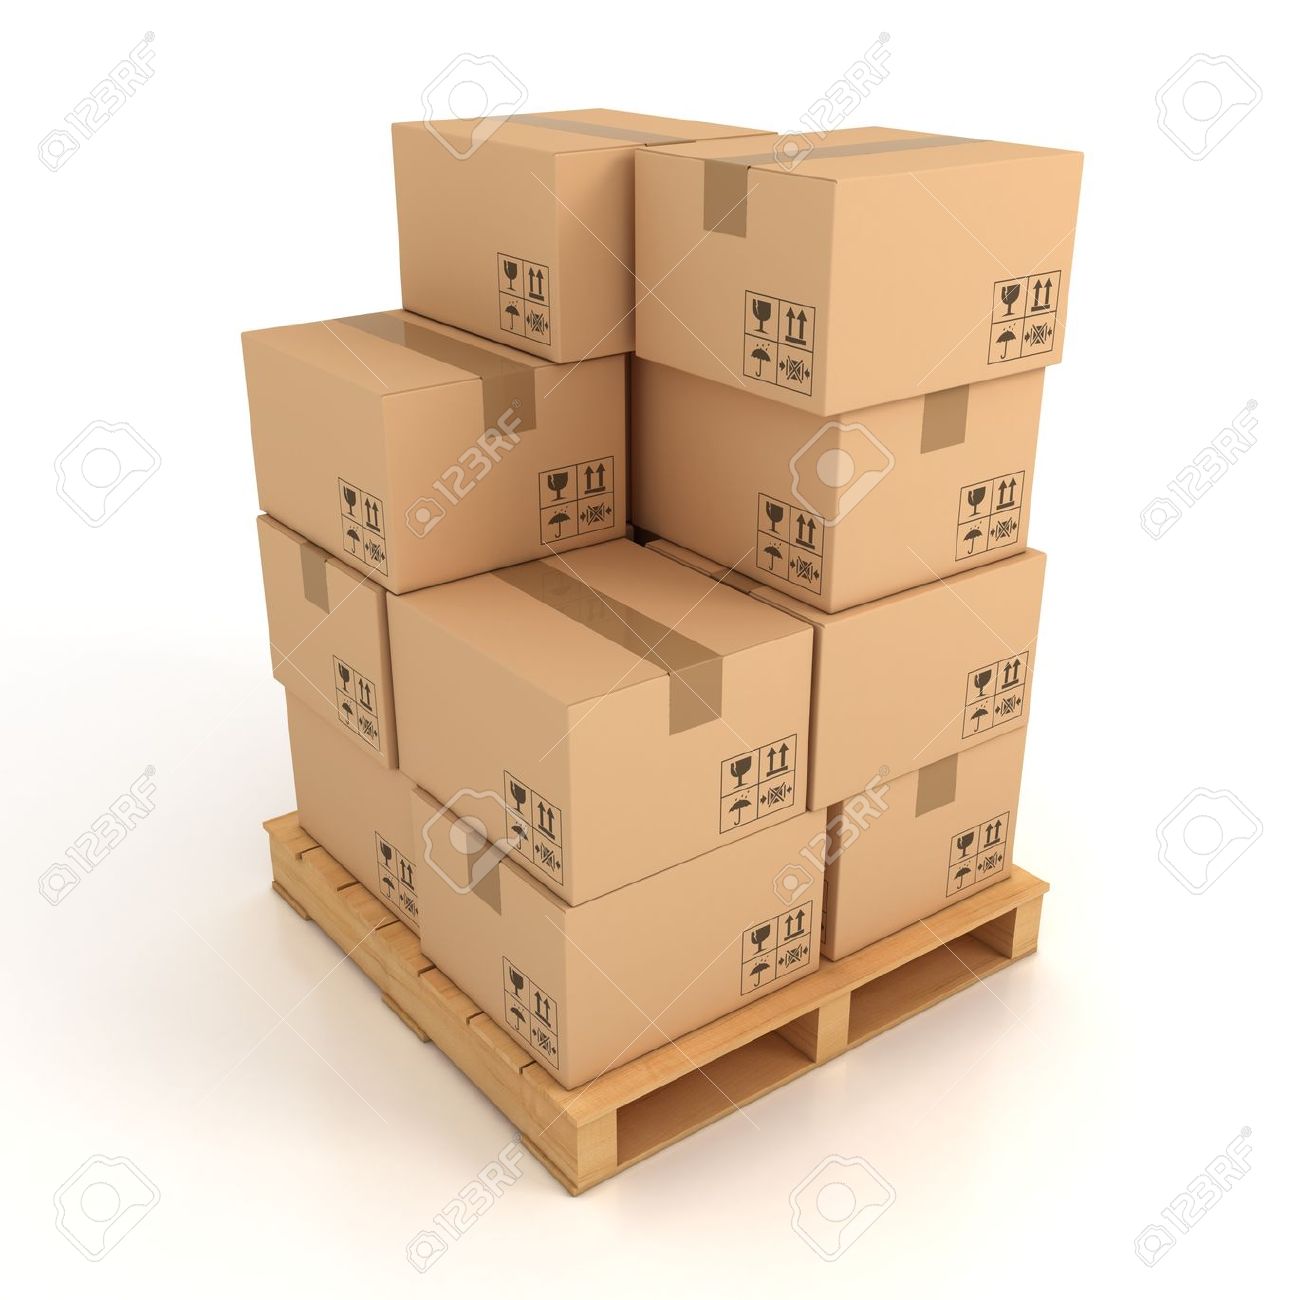 Cardboard-boxes-on-wooden-palette-.jpg